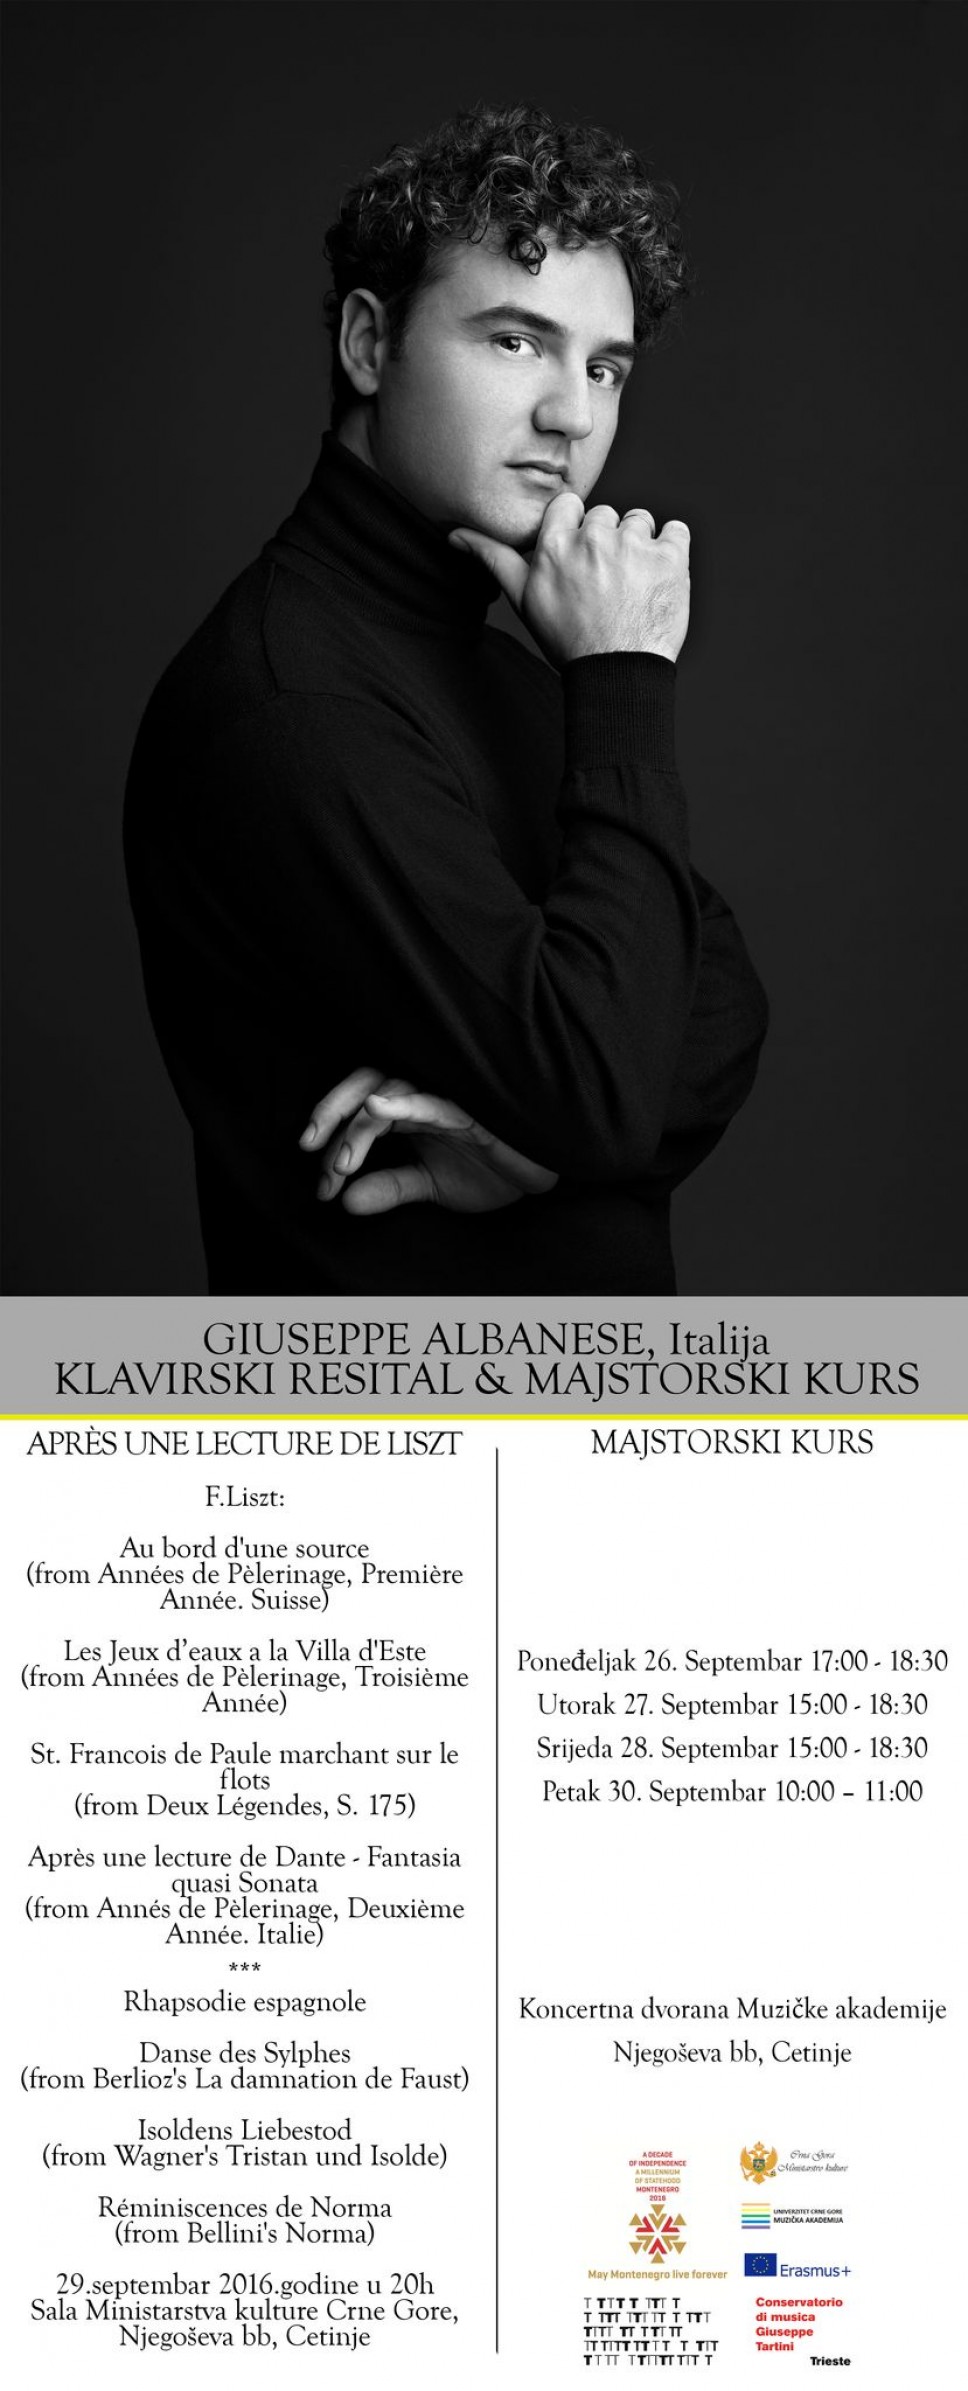 Concert and masterclass, Giuseppe Albanese